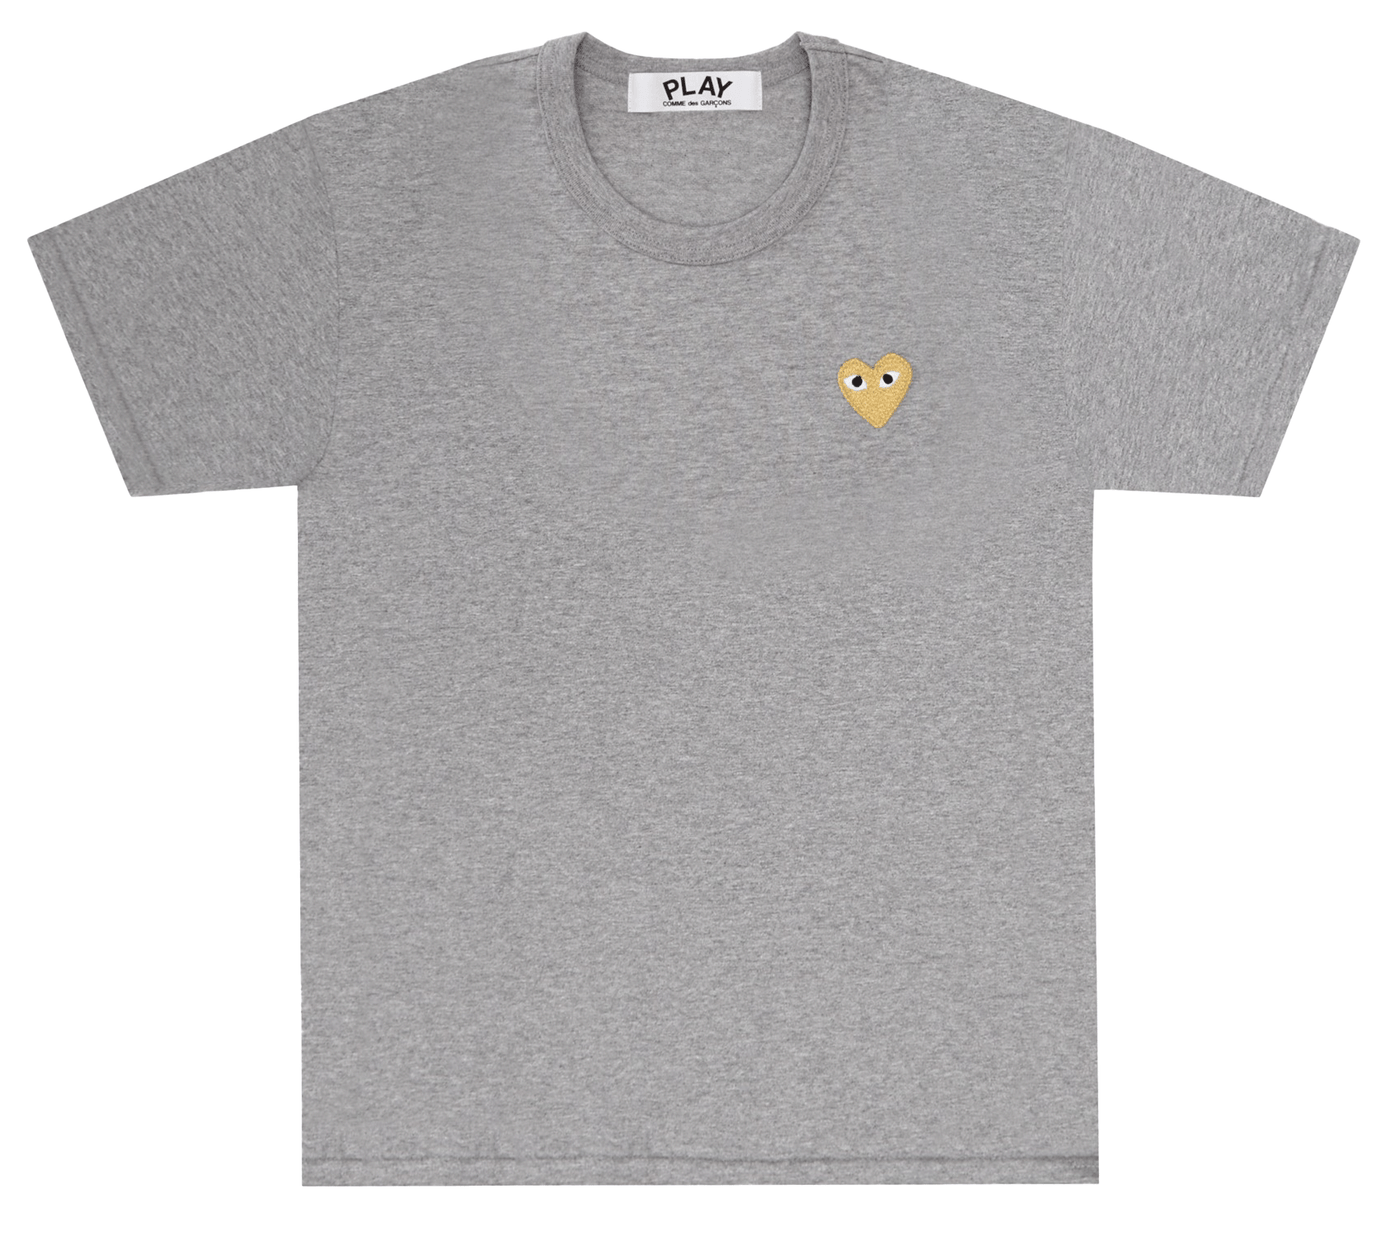    Comme-des-Garcons-Play-T-Shirt-With-Gold-Emblem-Men-Grey-1